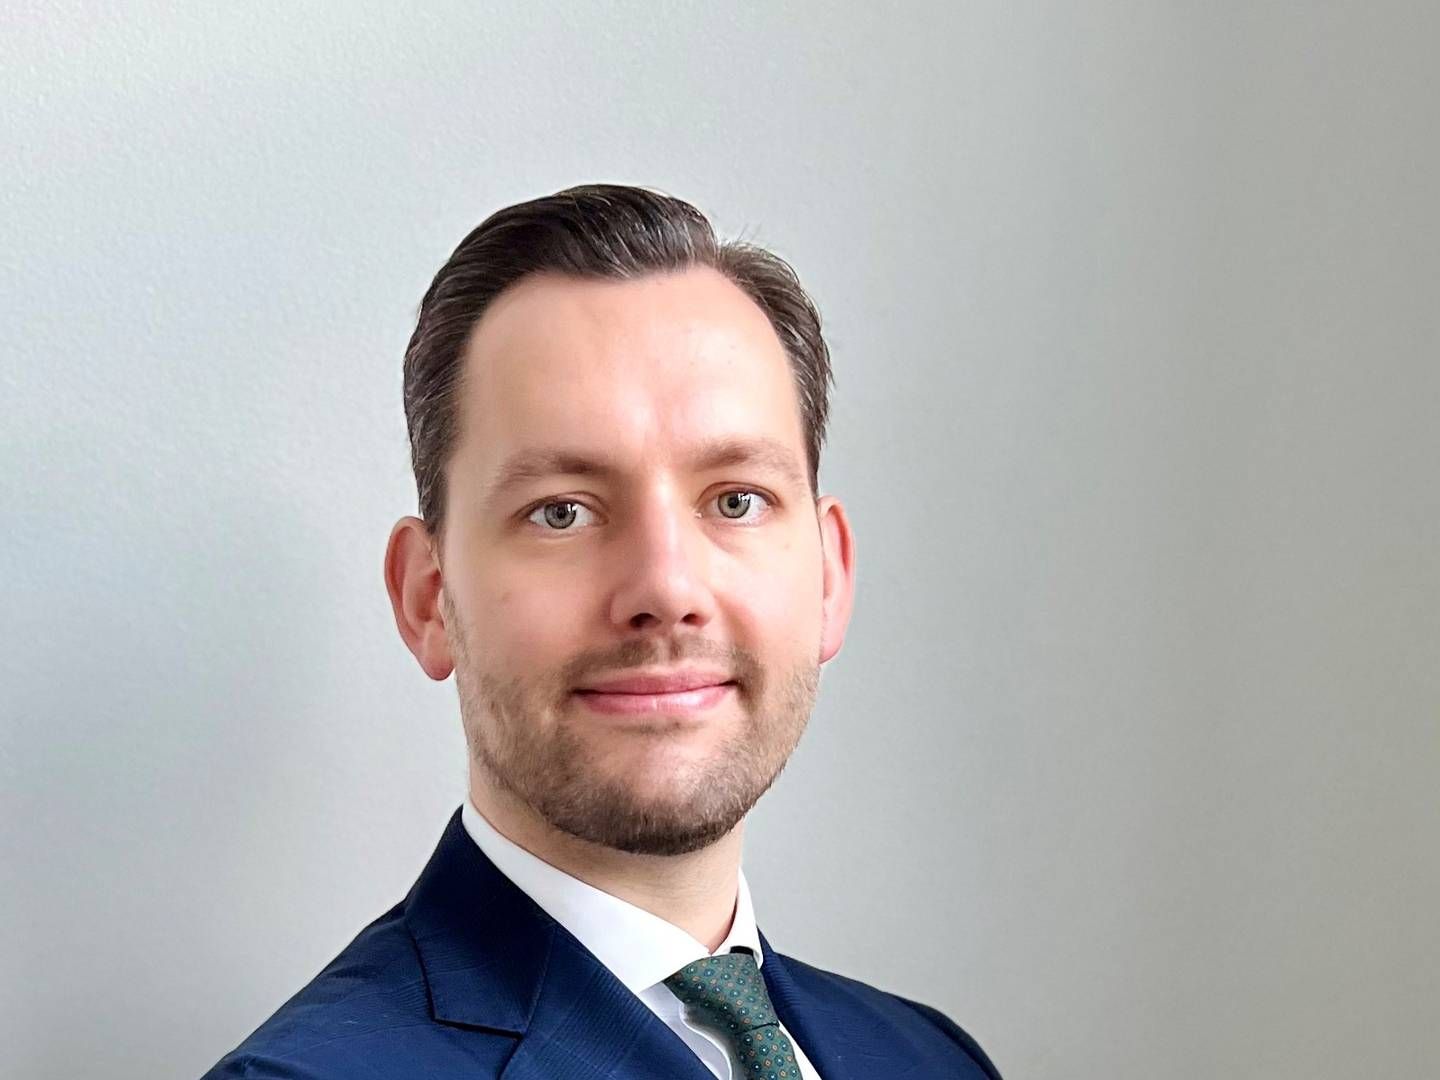 BankInvest has hired 33-year-old Tore Davidsen as new Senior Portfolio Manager | Photo: Bankinvest / Pr